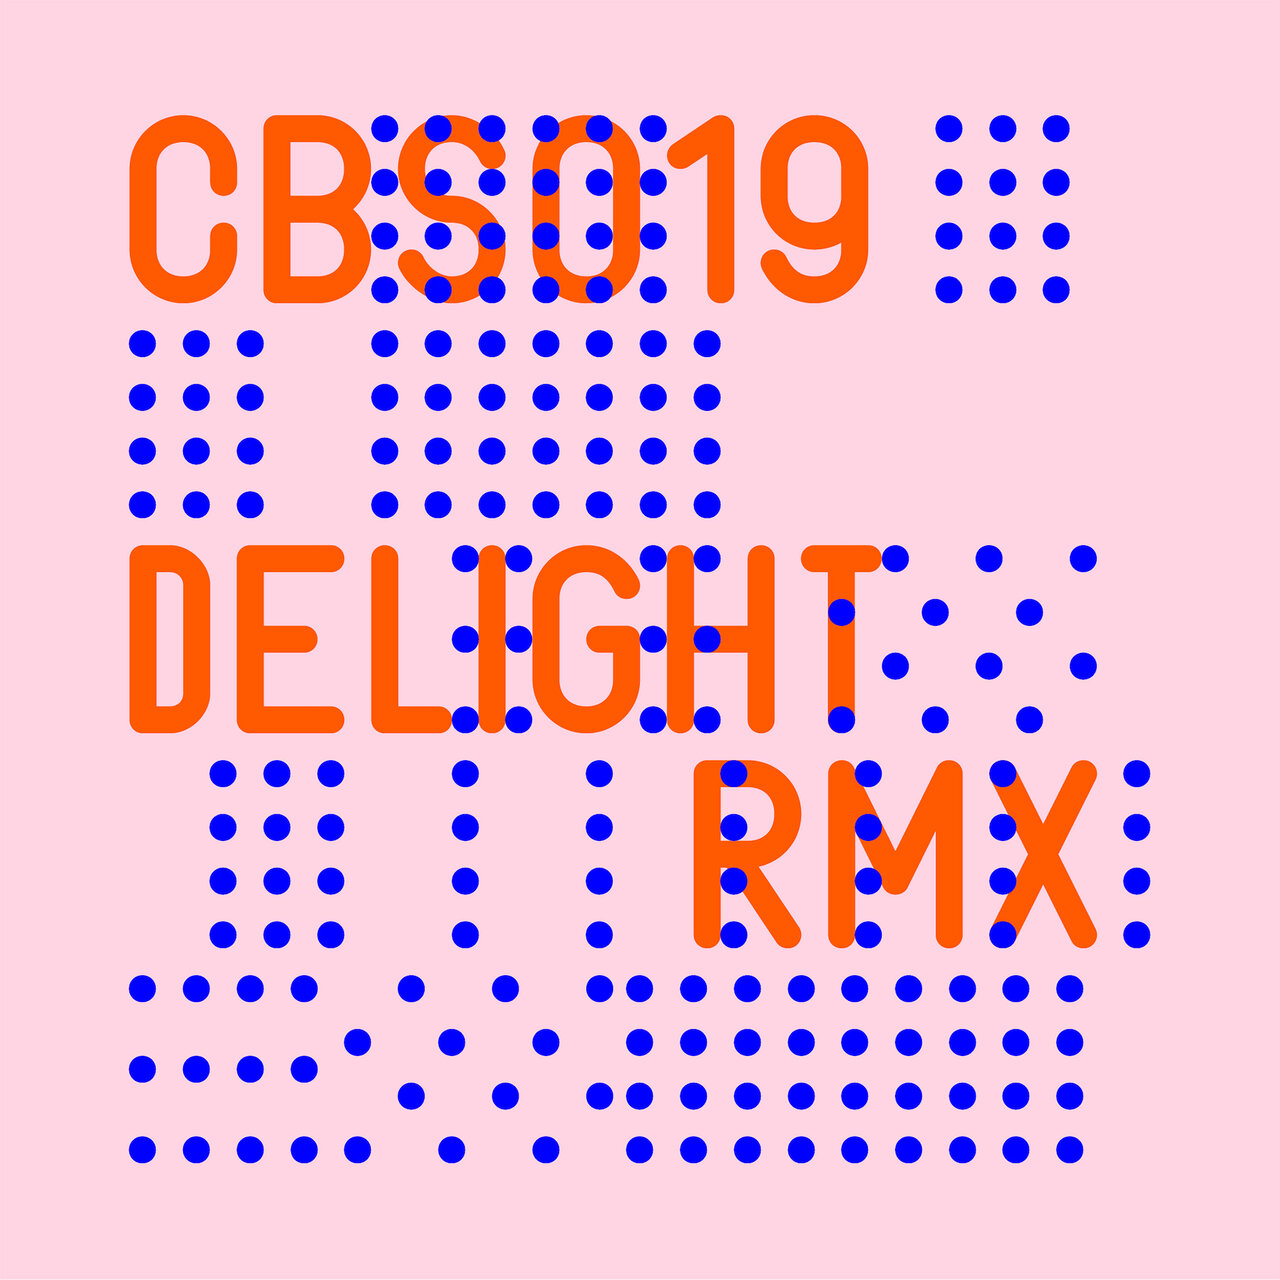 image cover: VA - Delight RMX on CB Sessions